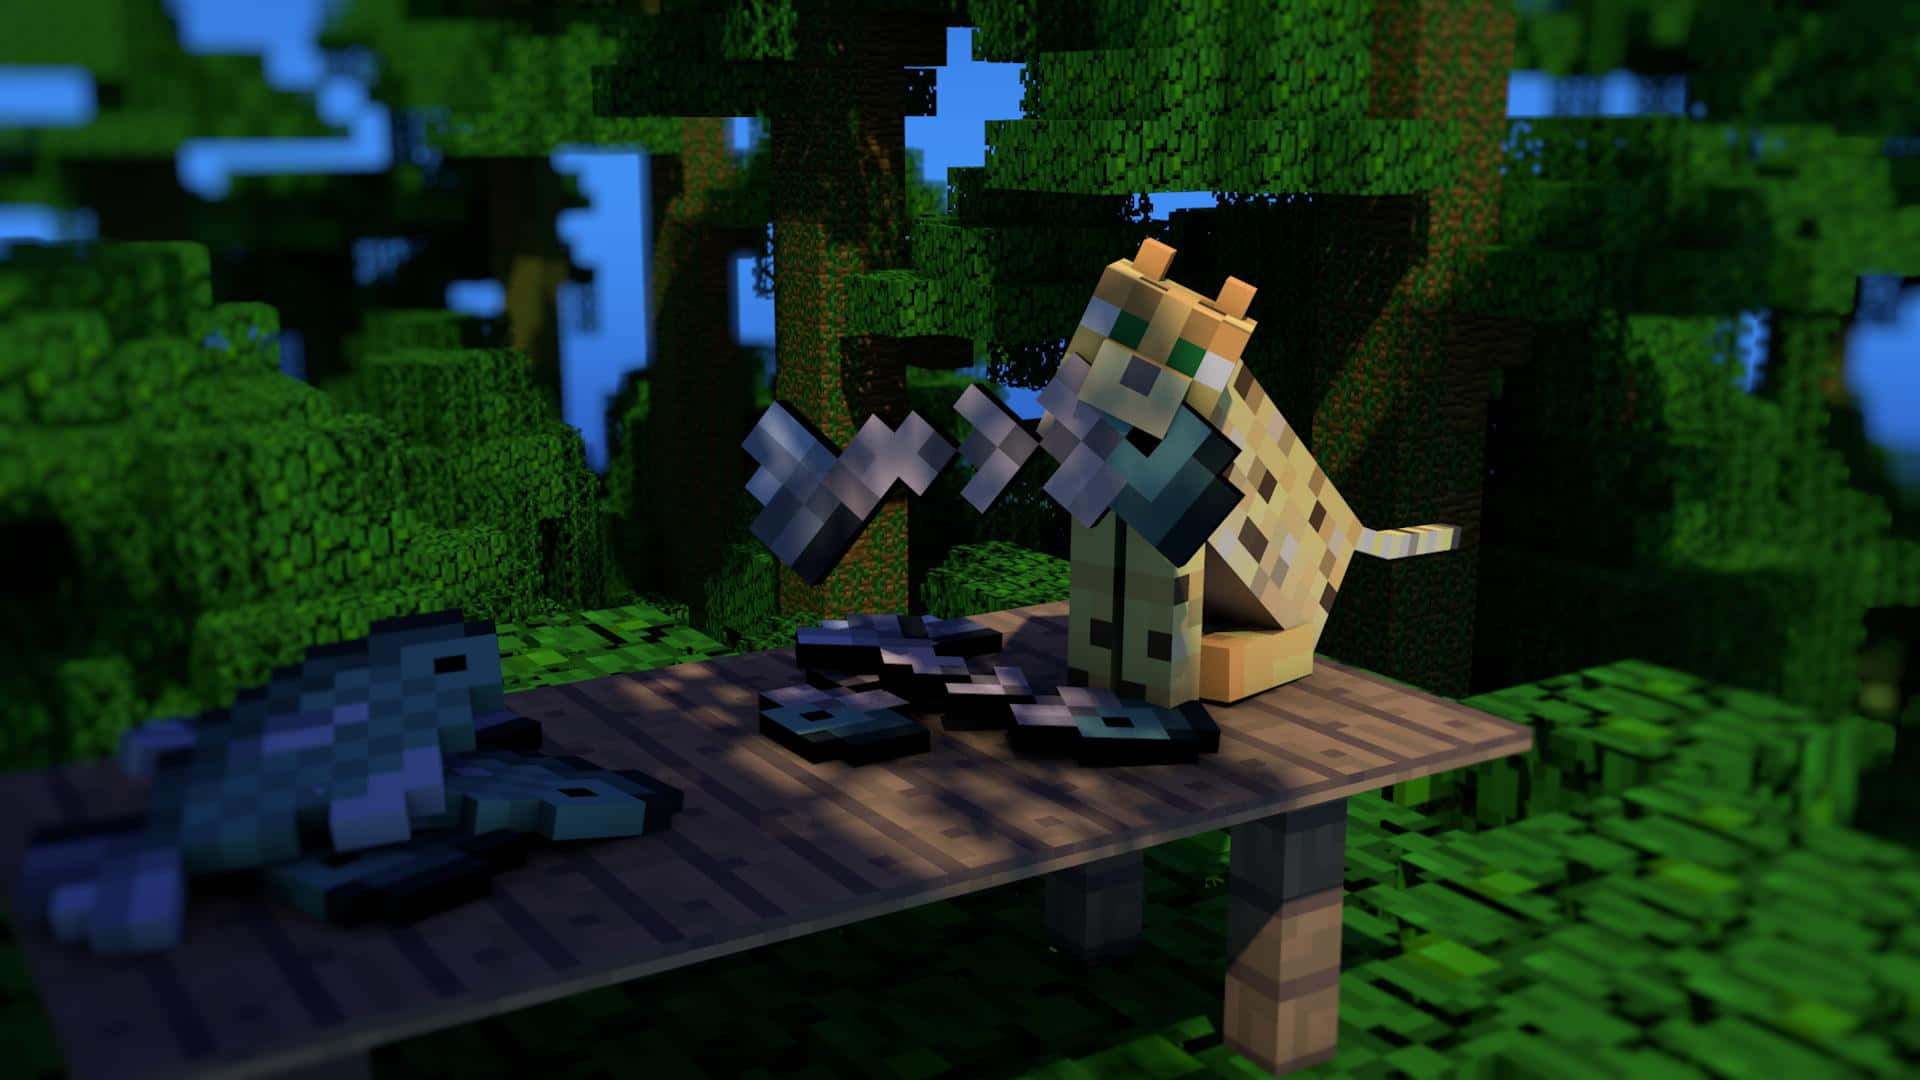 Mischievous Minecraft Ocelot exploring its blocky world. Wallpaper